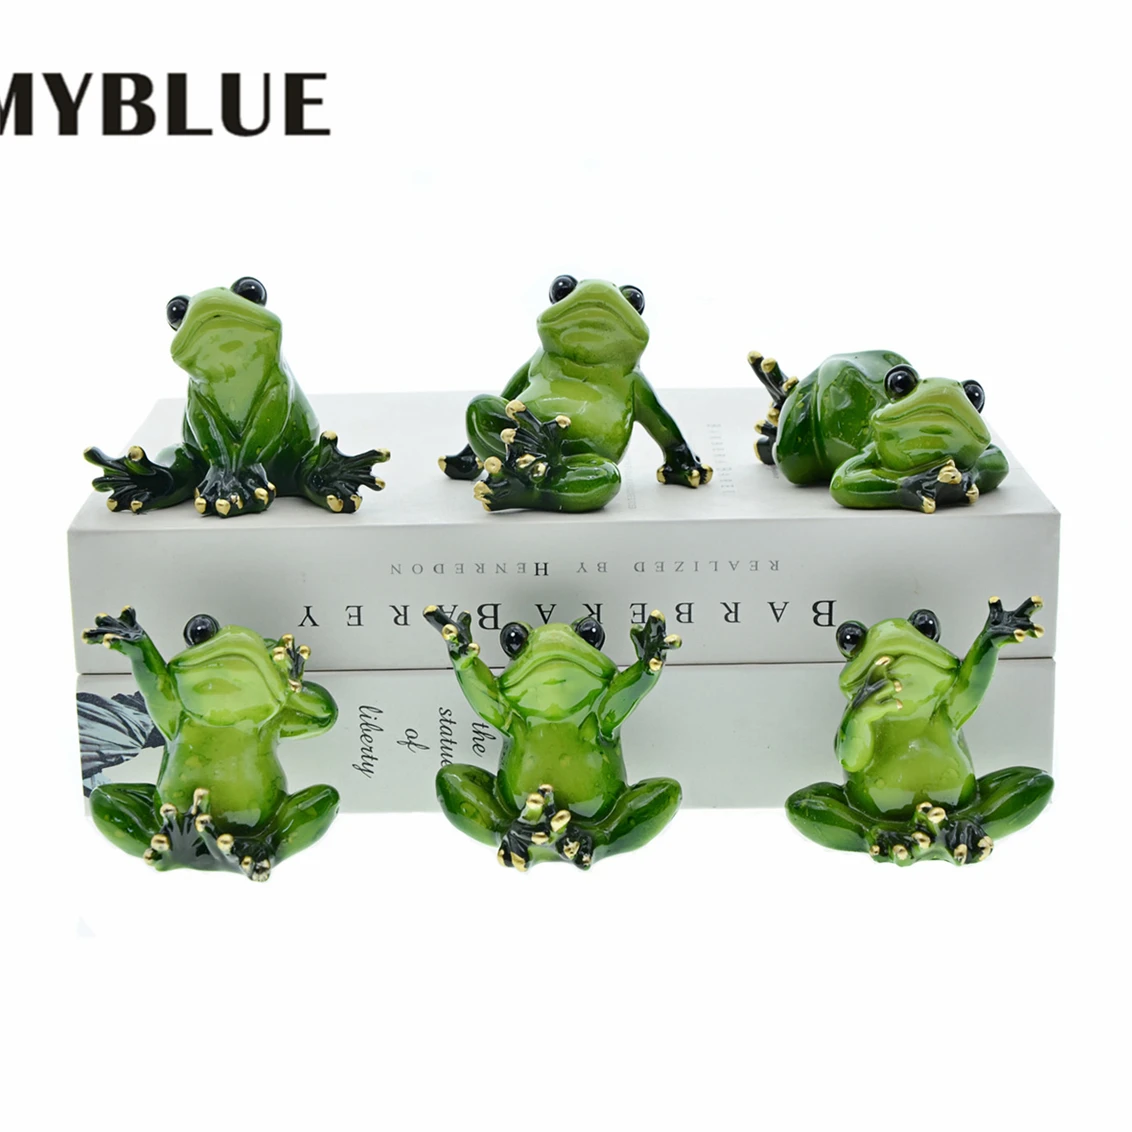 MYBLUE Artifical Reisn Frog Figures Statue Sculpture Decorative Things For Garden Home Room Flower Pot Aquarium Decoration